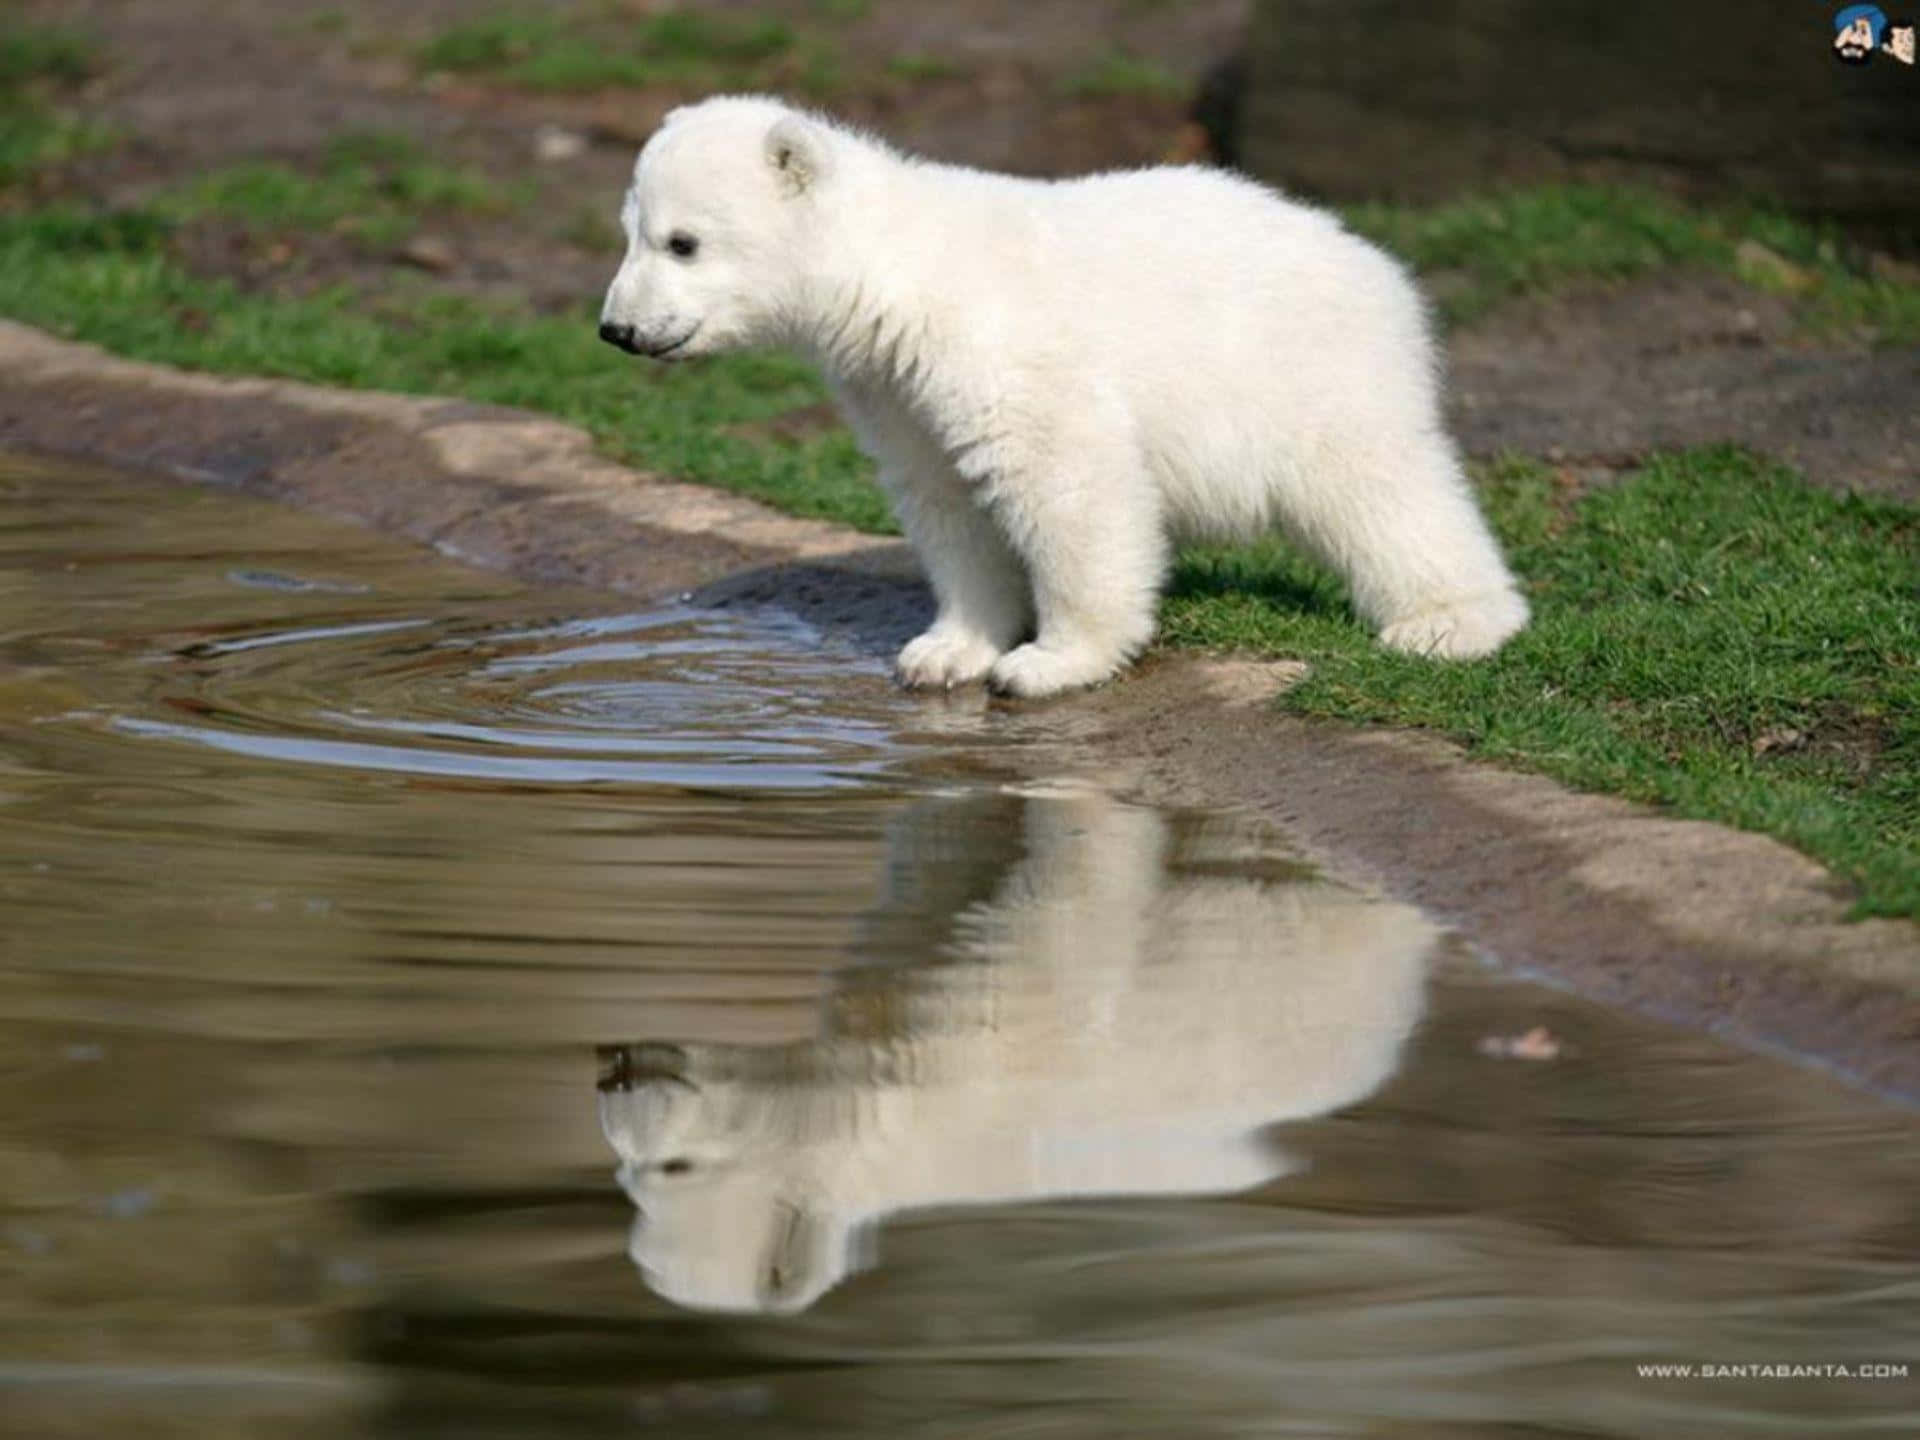 "The Majestic Polar Bear"